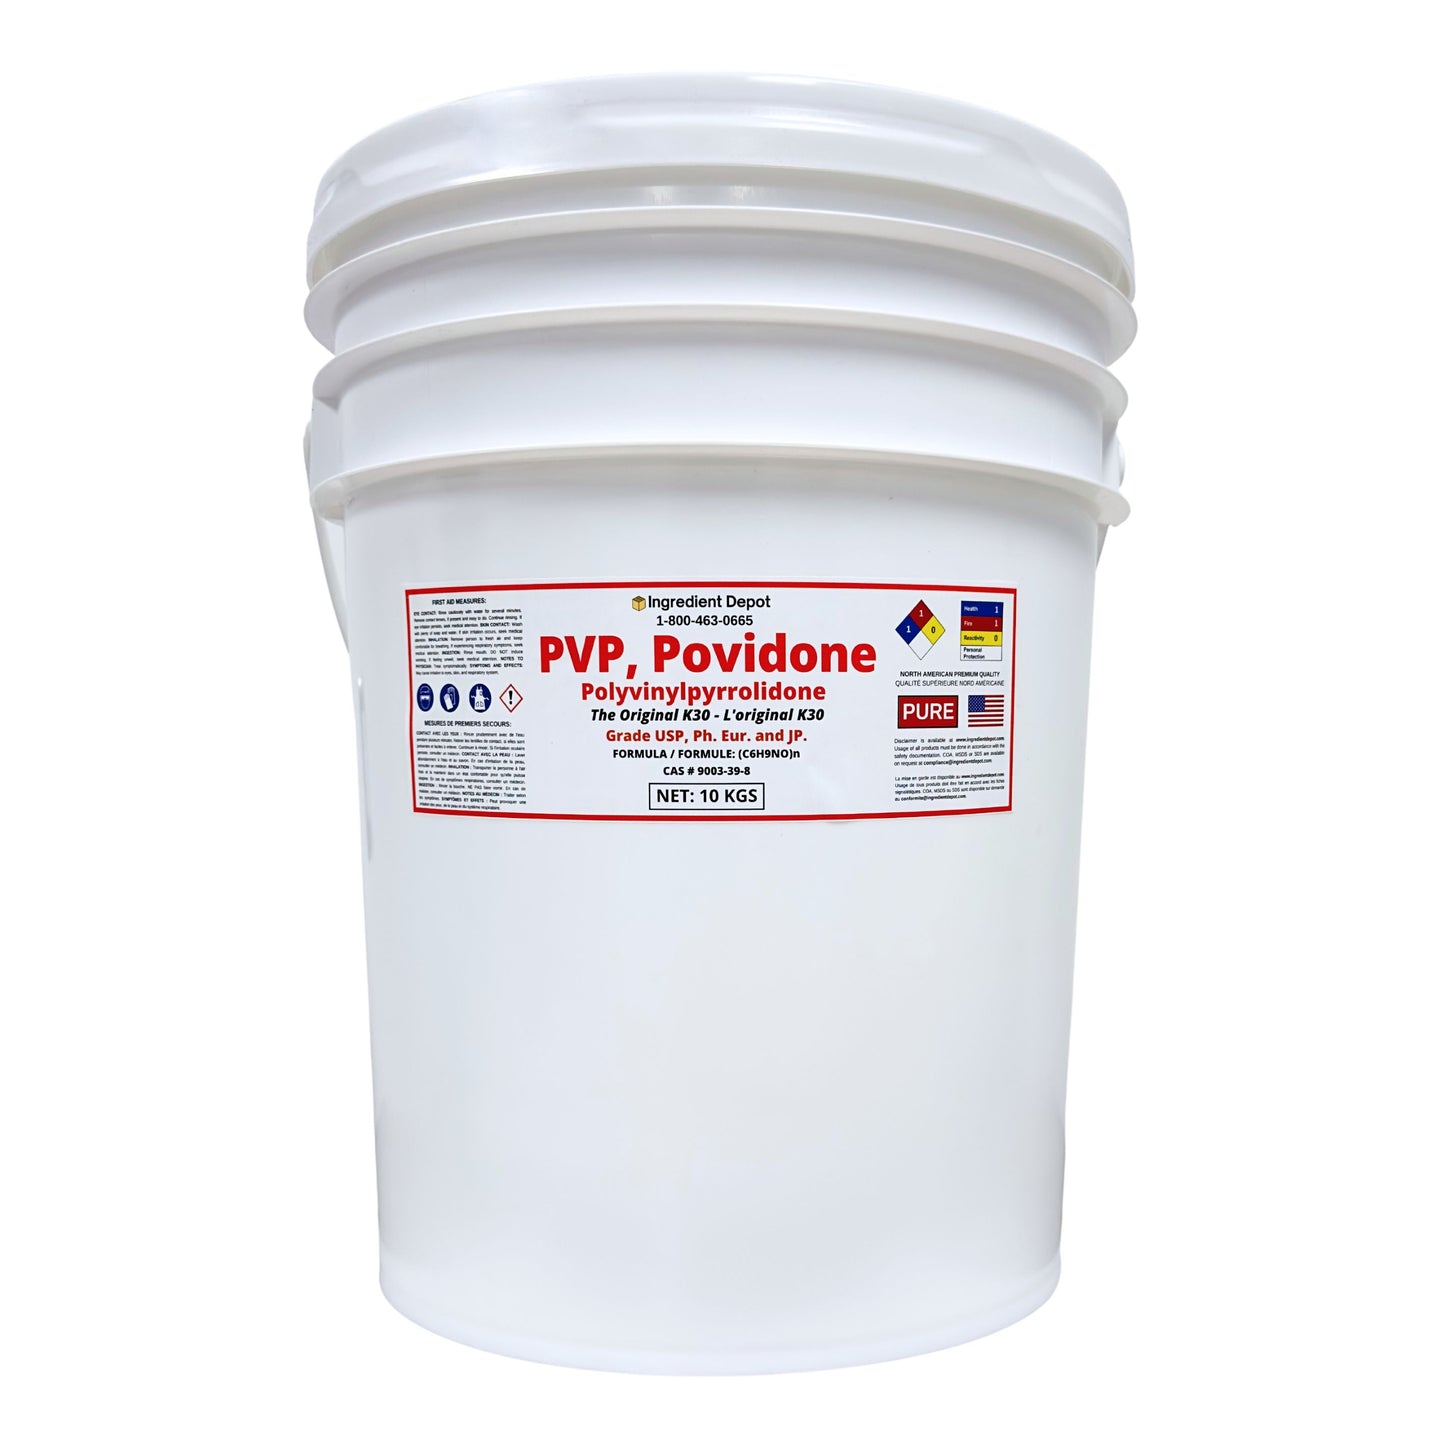 PVP Original K30, Povidone, Polyvinylpyrrolidone 10 kgs - IngredientDepot.com